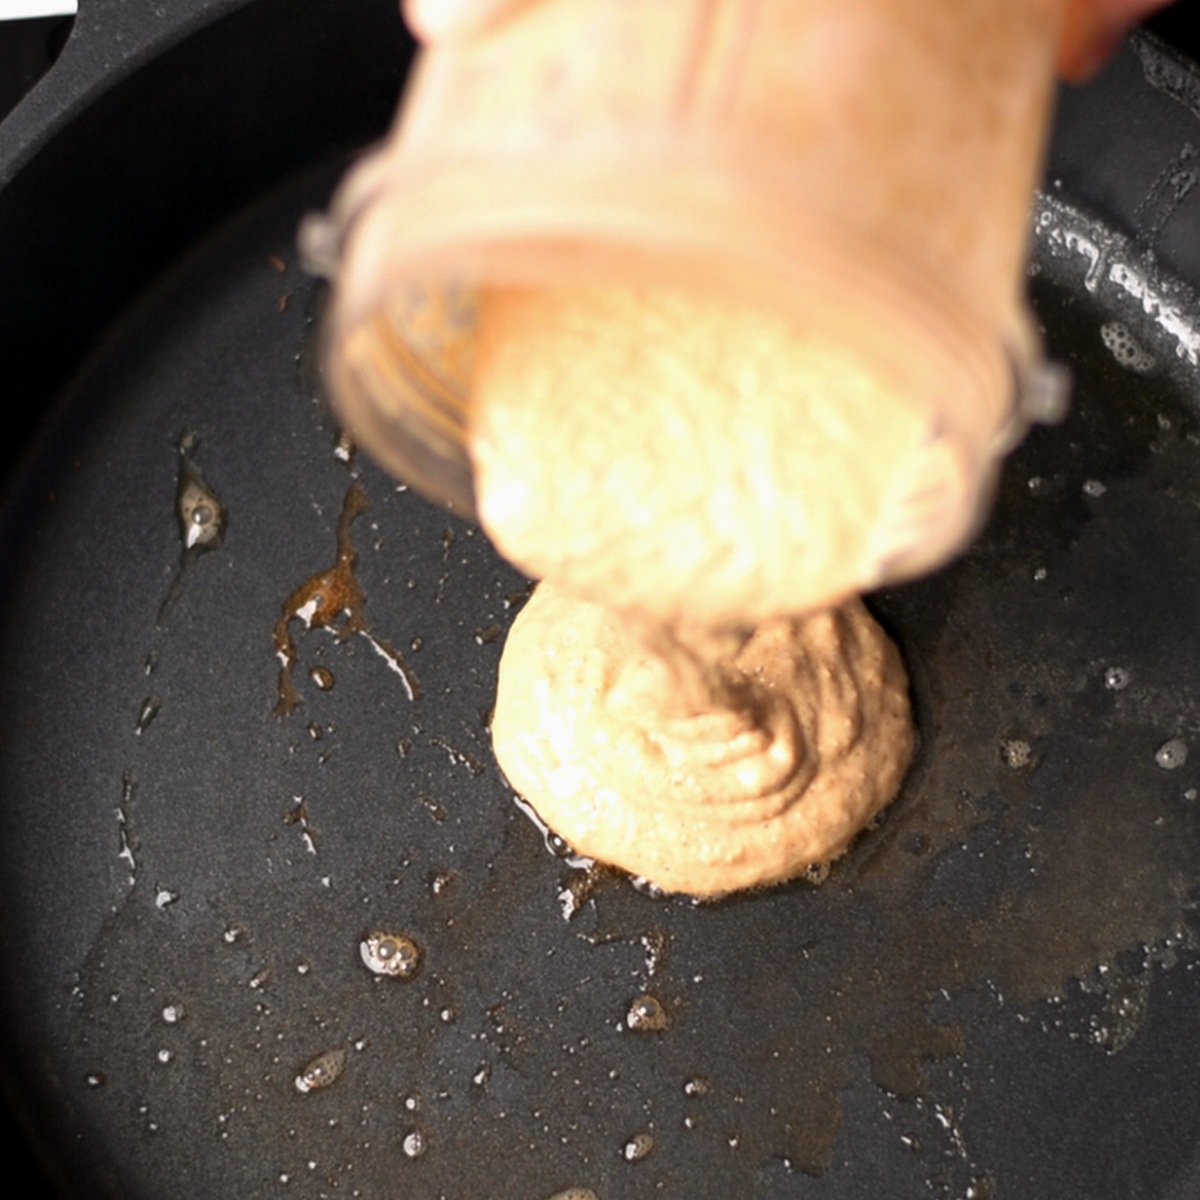 Pouring pancake batter onto a skillet.